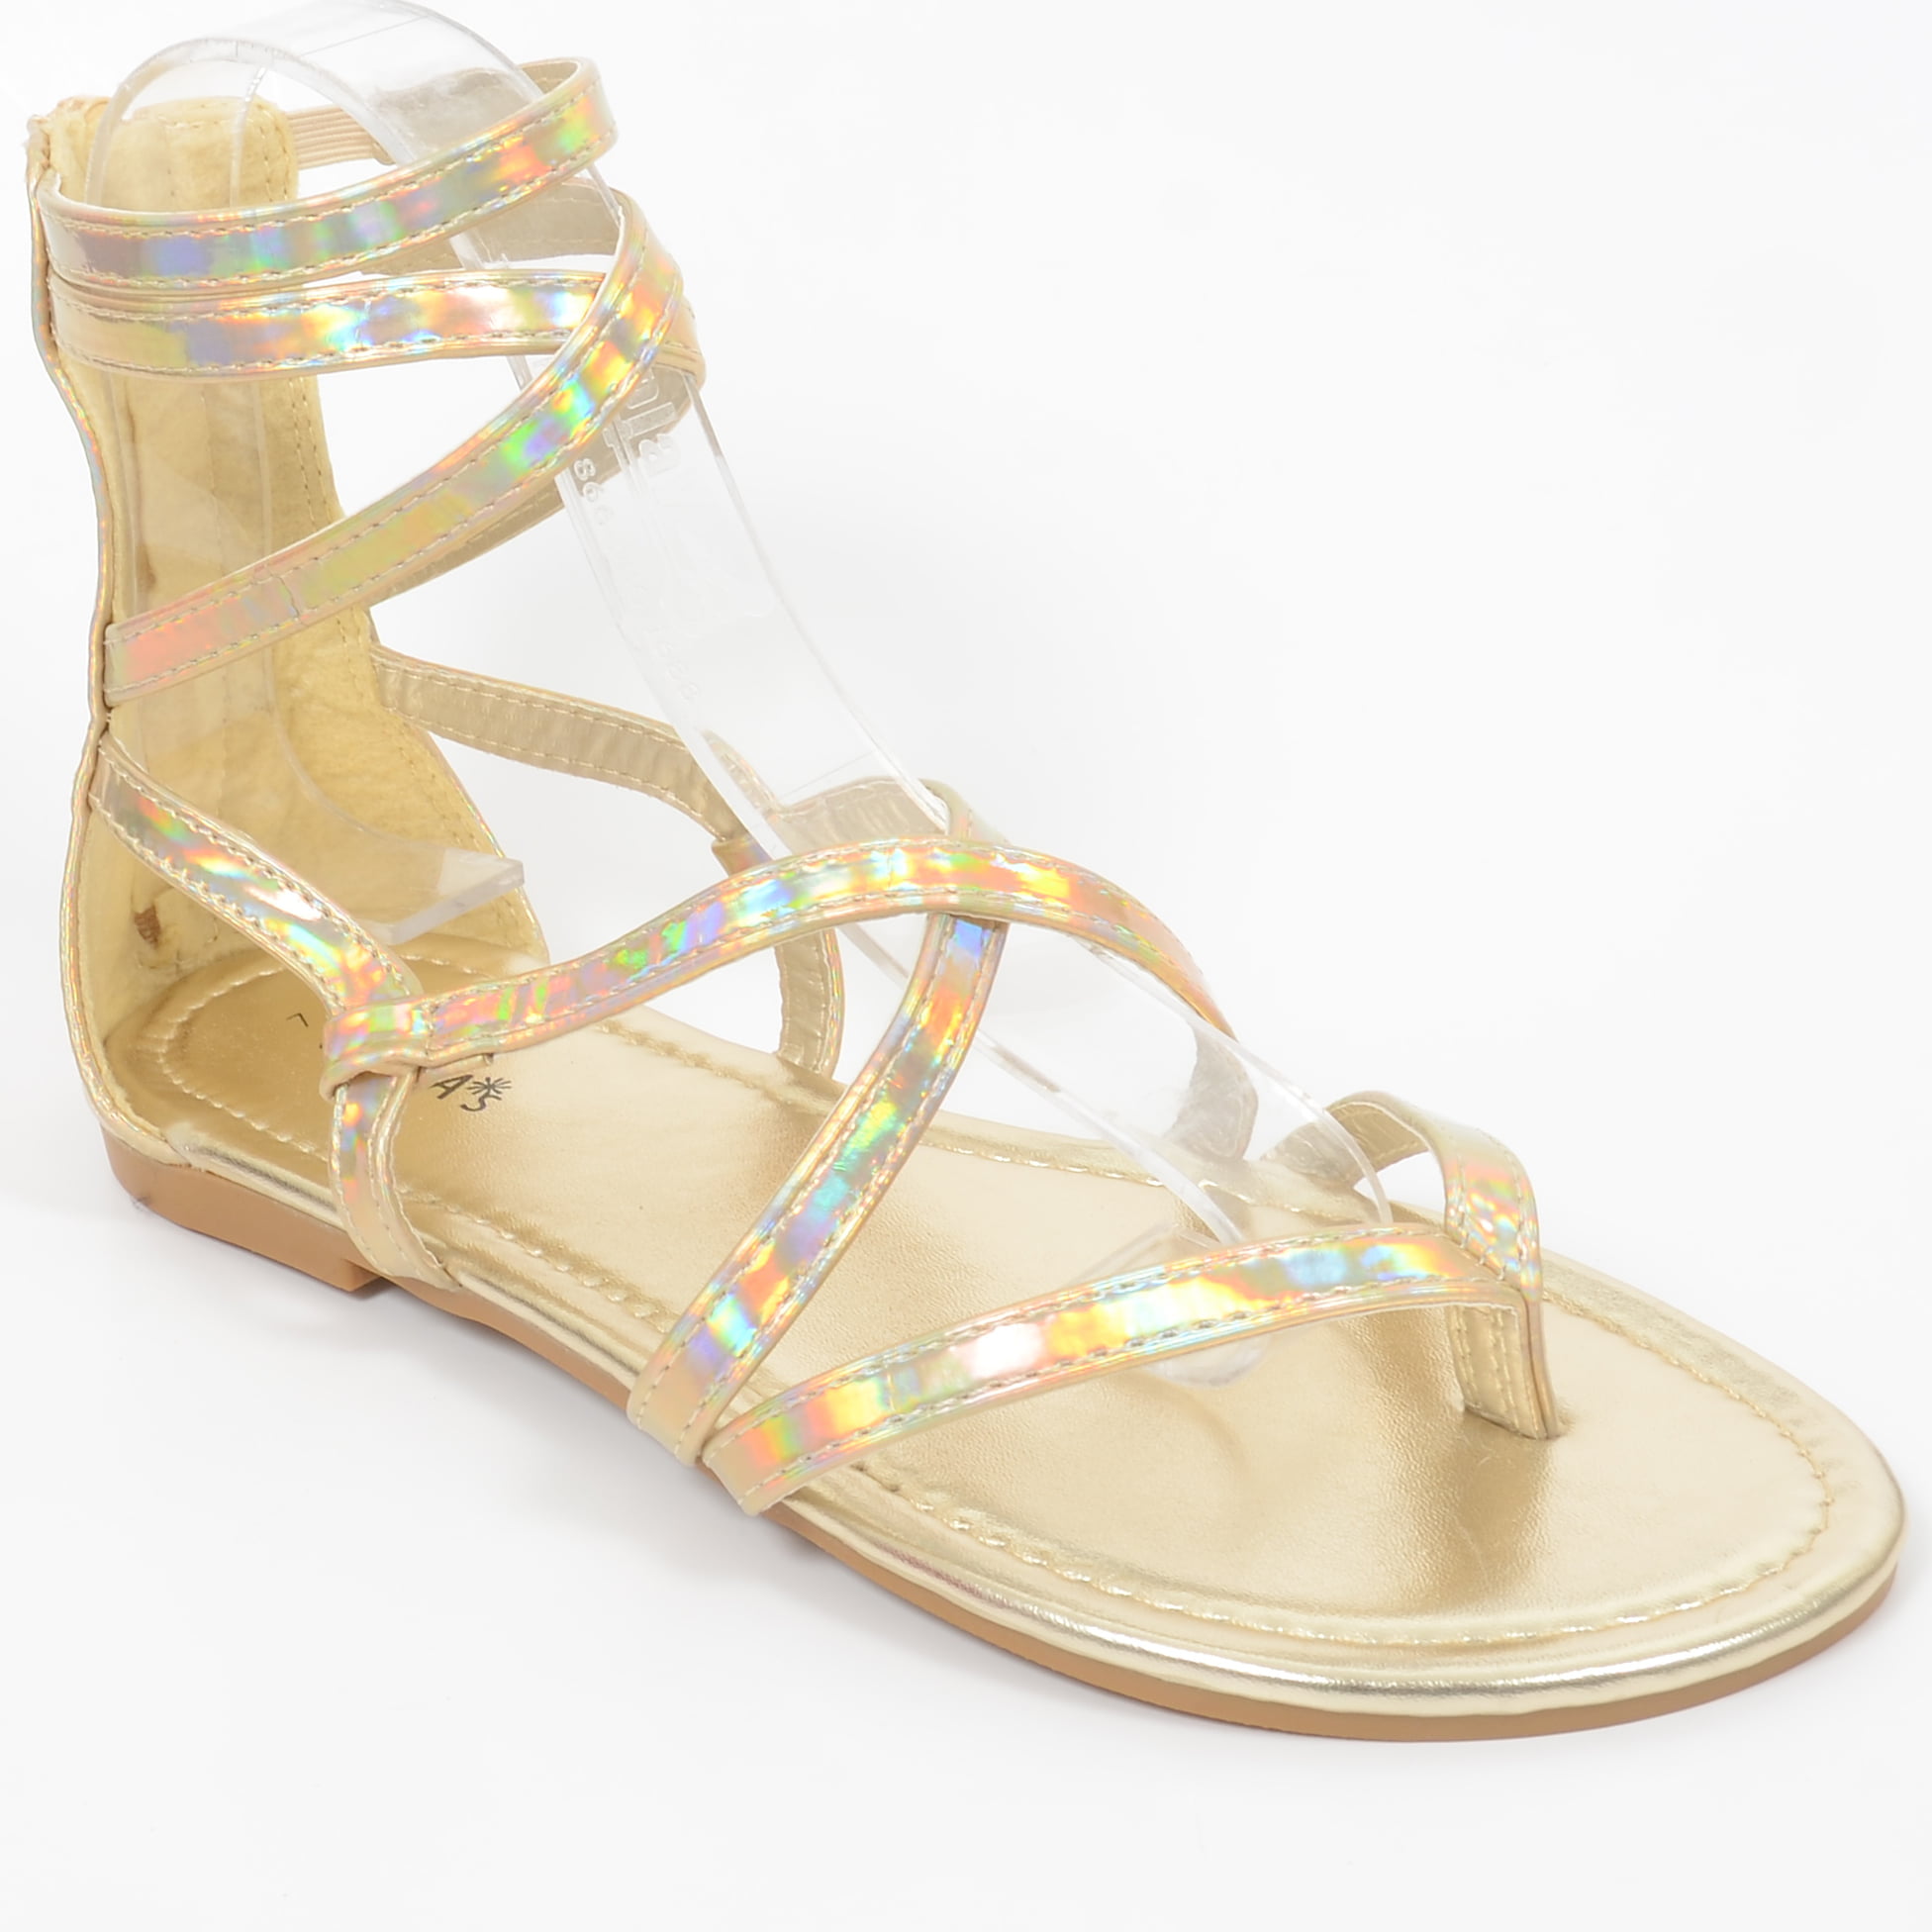 New Womens Metallic Thong Flip Flops Flat Sandals  Slip On Shoe Silver Gold 